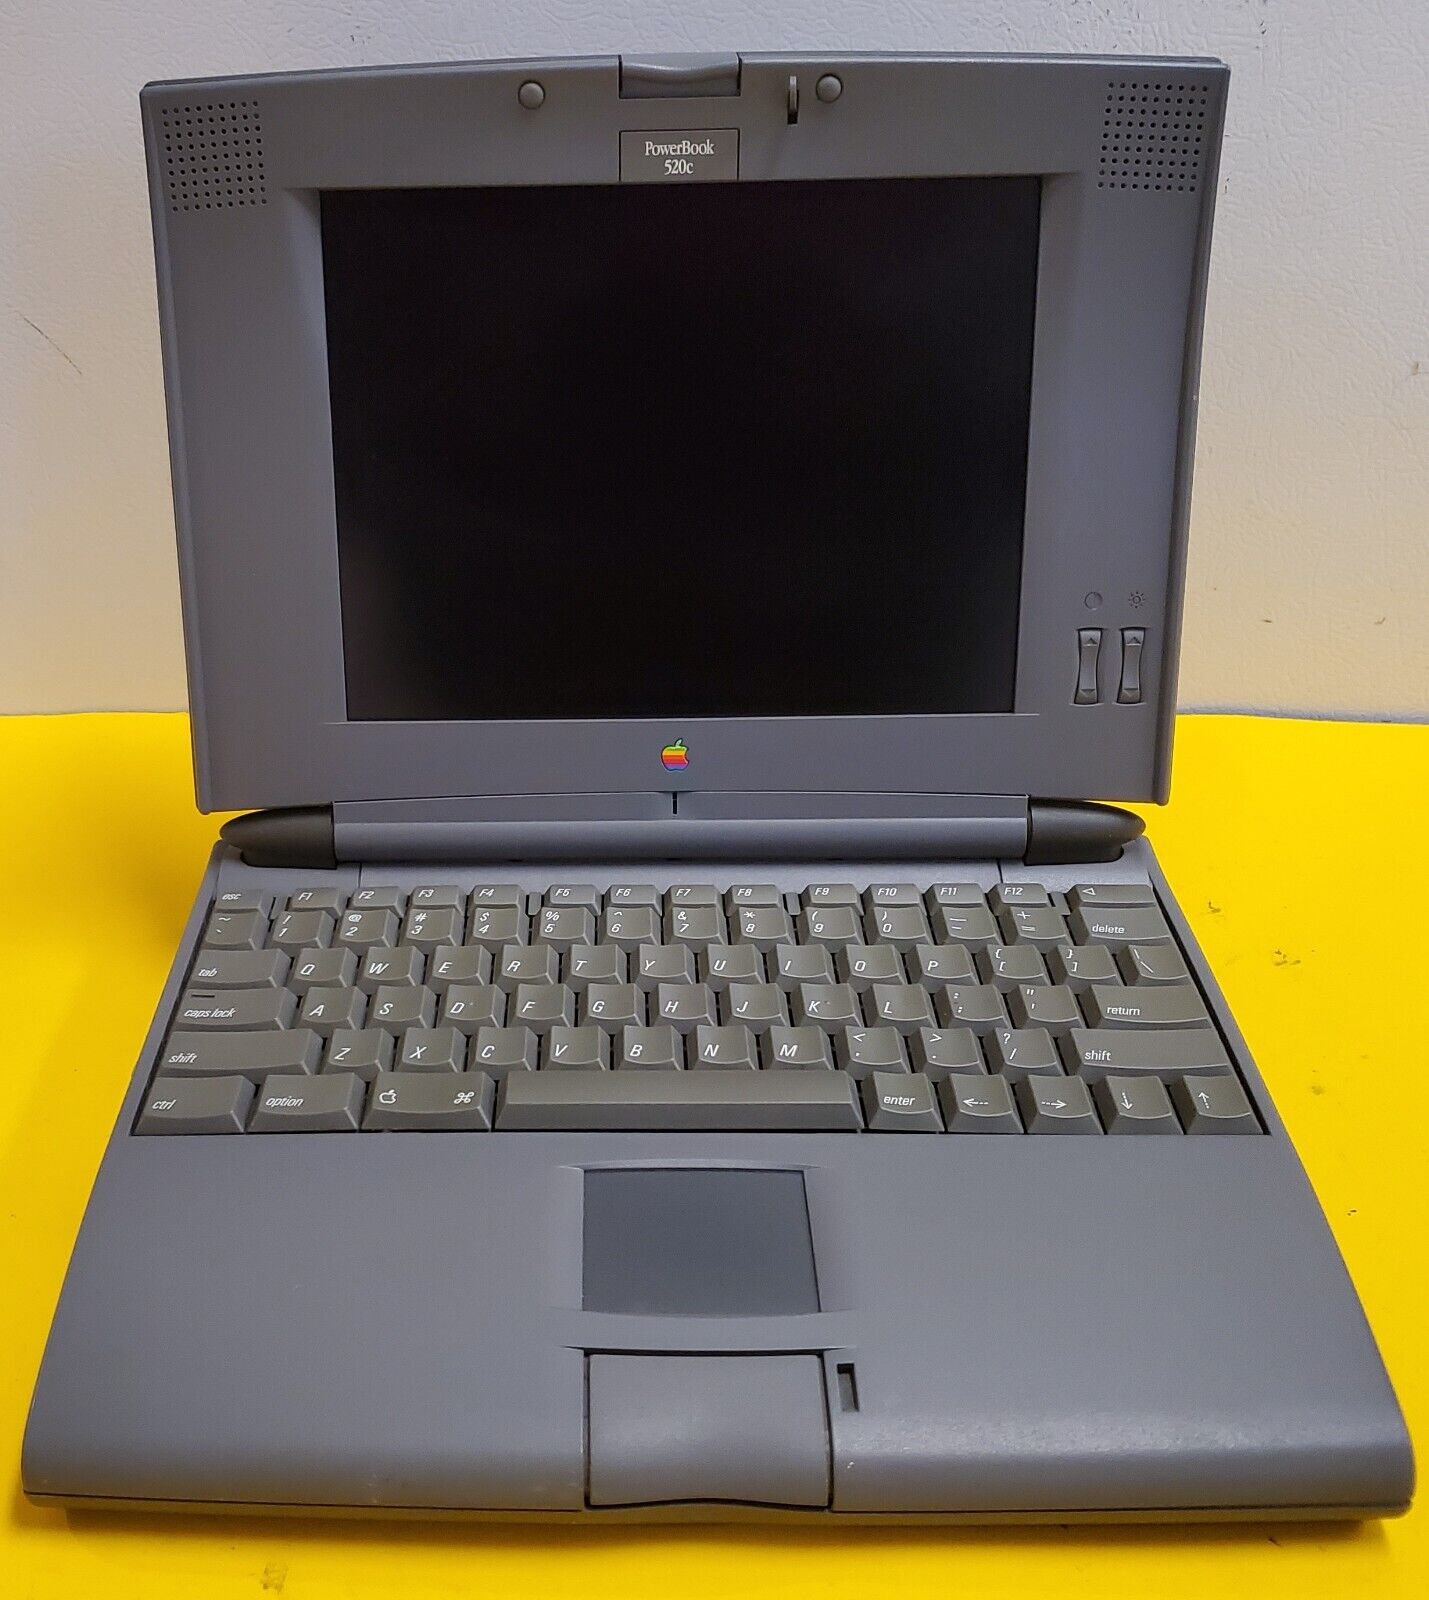 Vintage Apple Powerbook 520C 500C Series Laptop Computer Retro Untested - as is